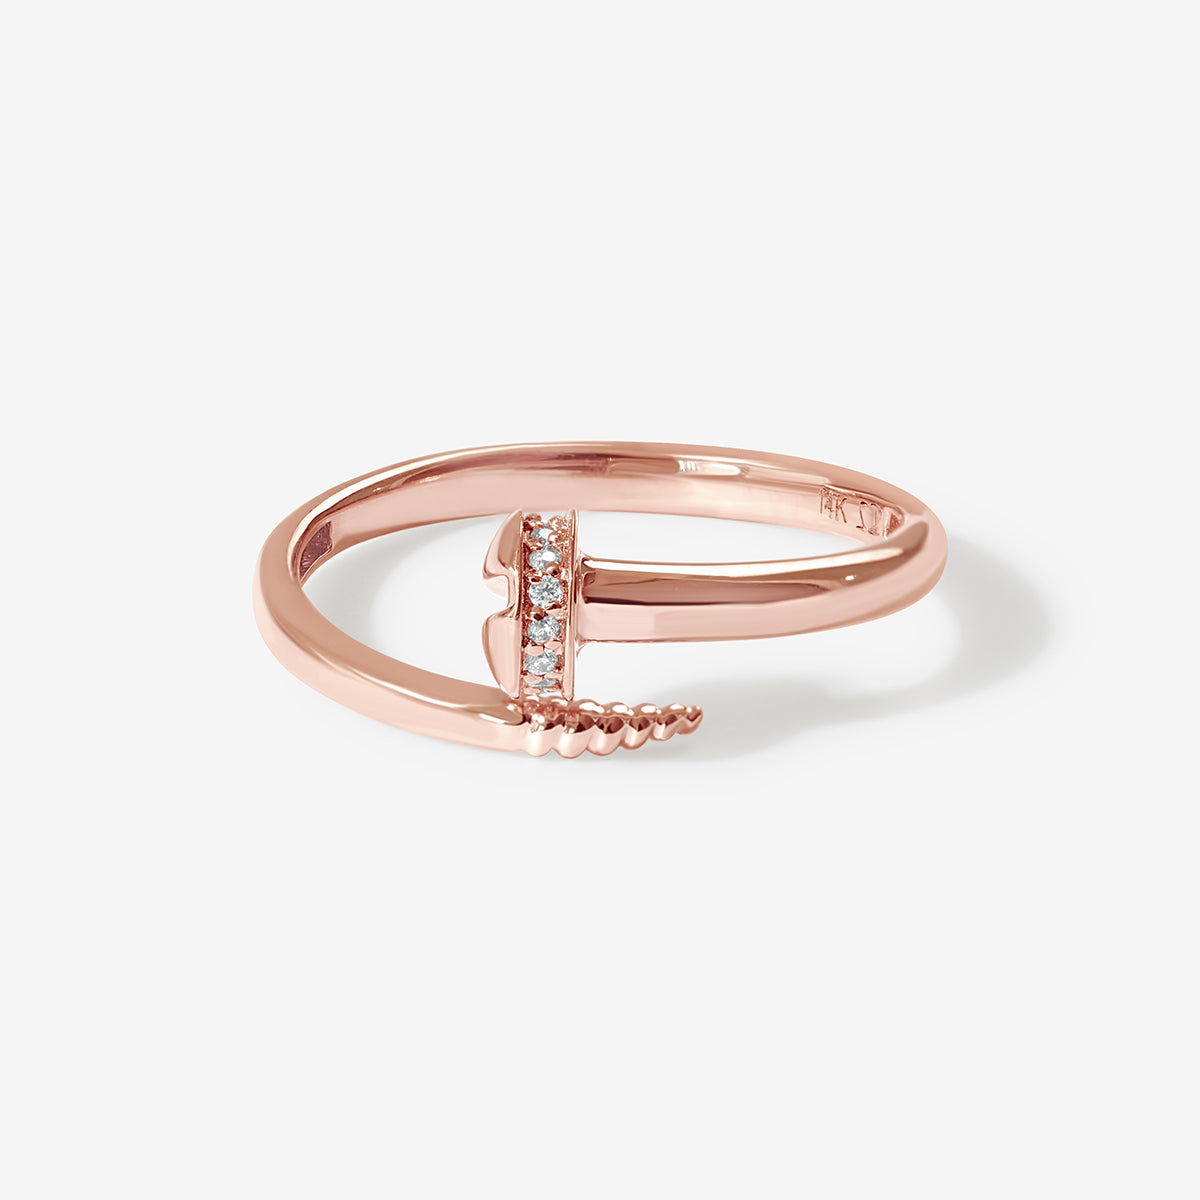 Cartier Juste Un Clou Ring Pink Gold Diamonds size 48 US 4.5 $9850 retail